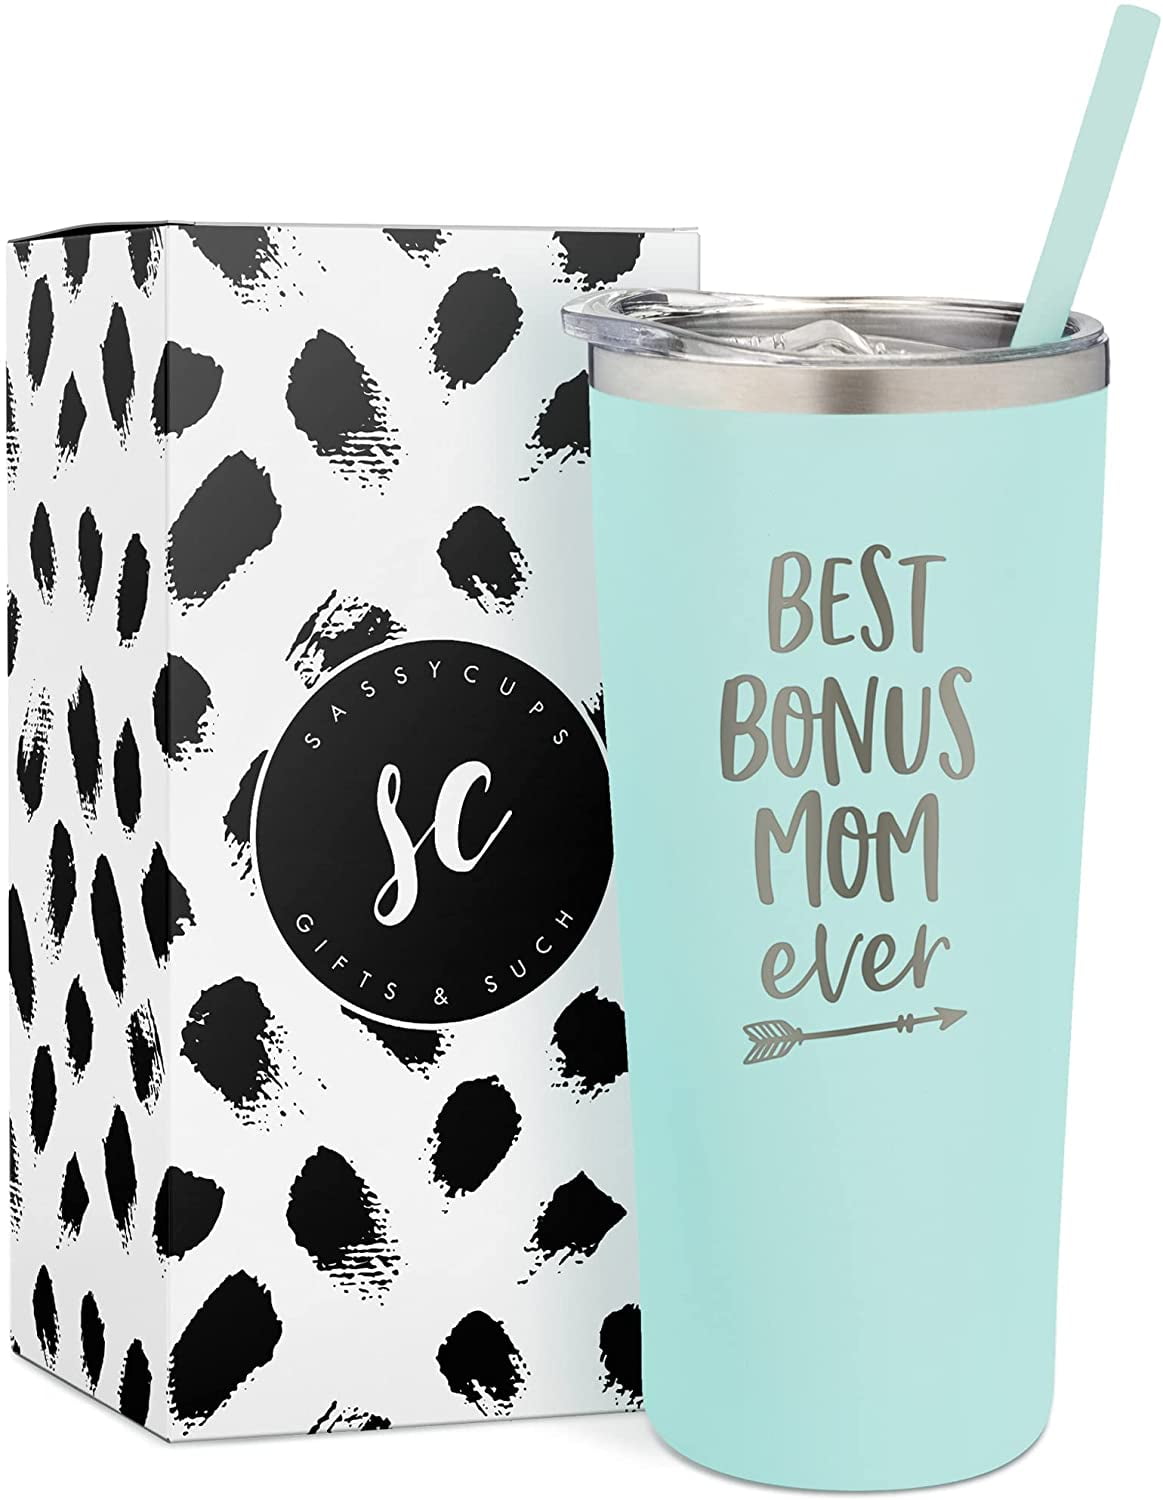 25 Heartfelt Bonus Mom Gifts For Any Occasion - Gift Guide Society